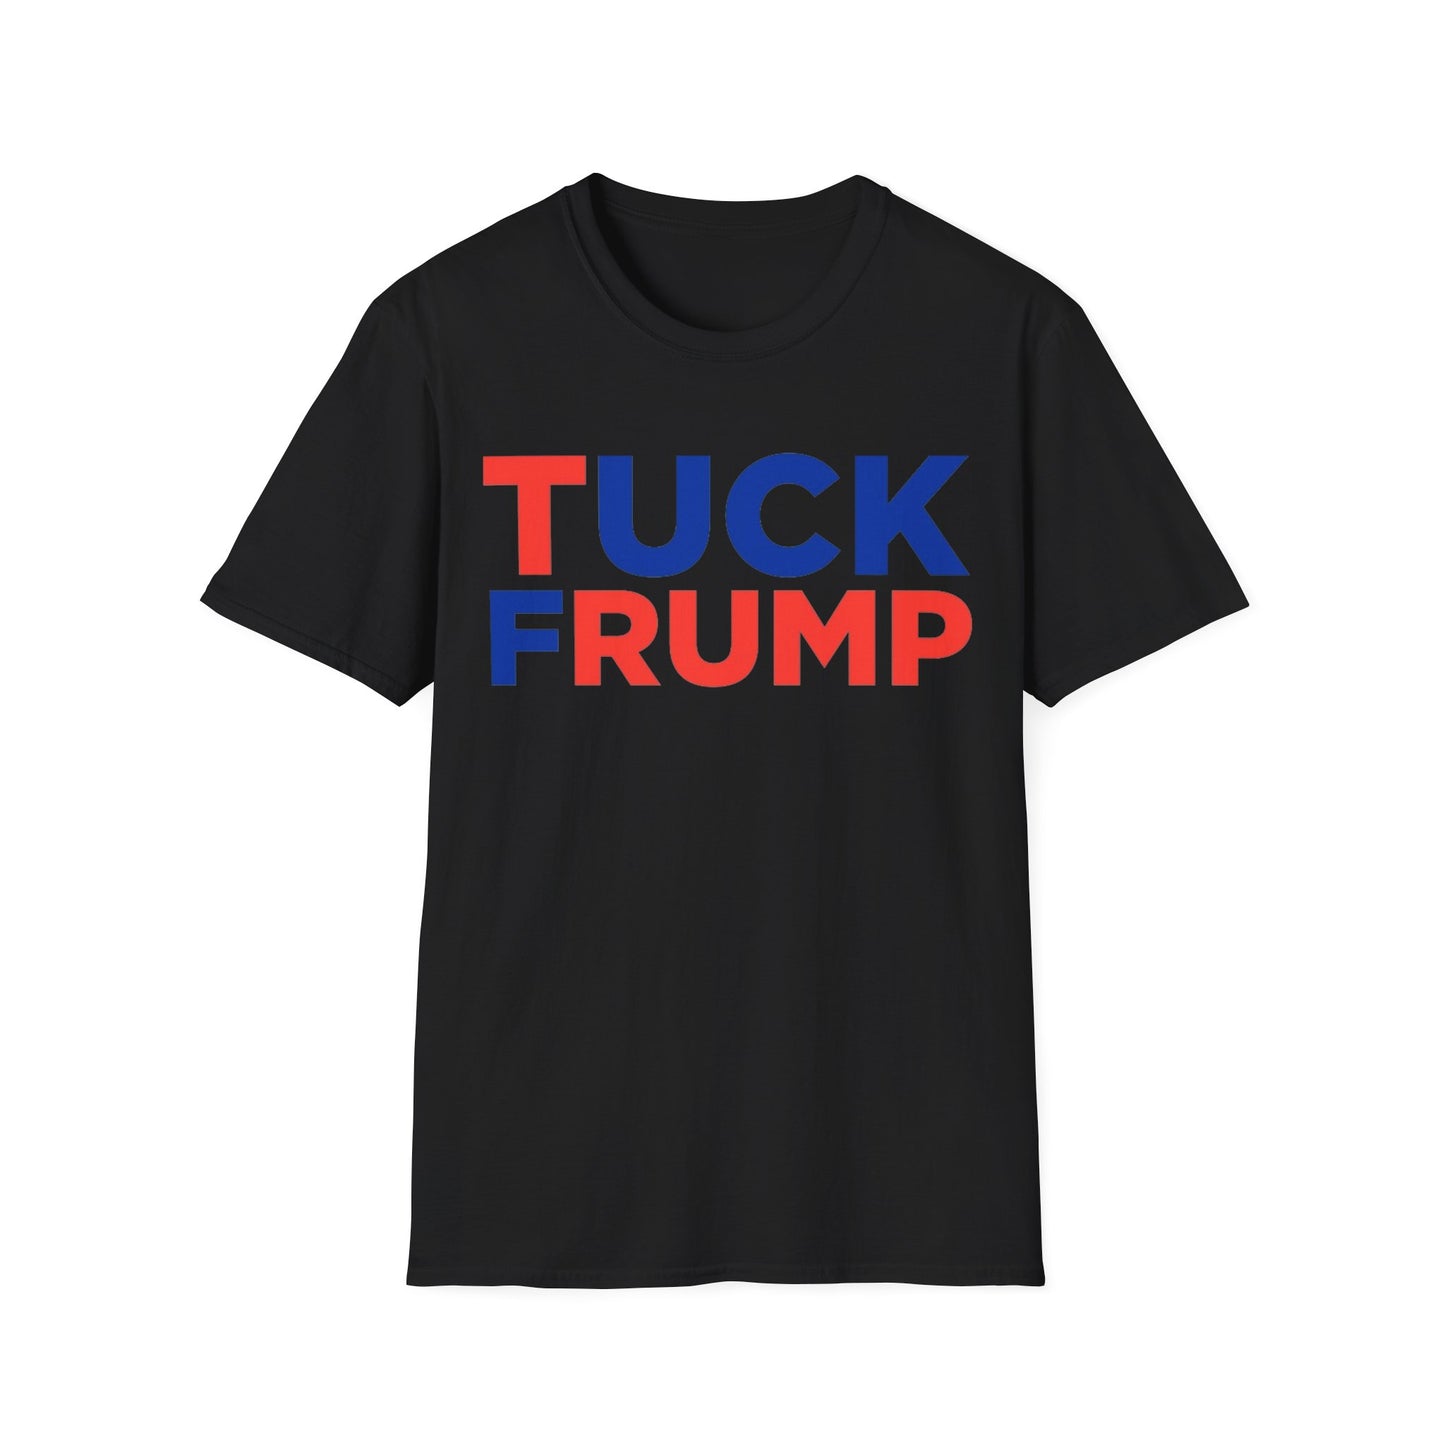 Tuck Frump - Unisex Softstyle T-Shirt